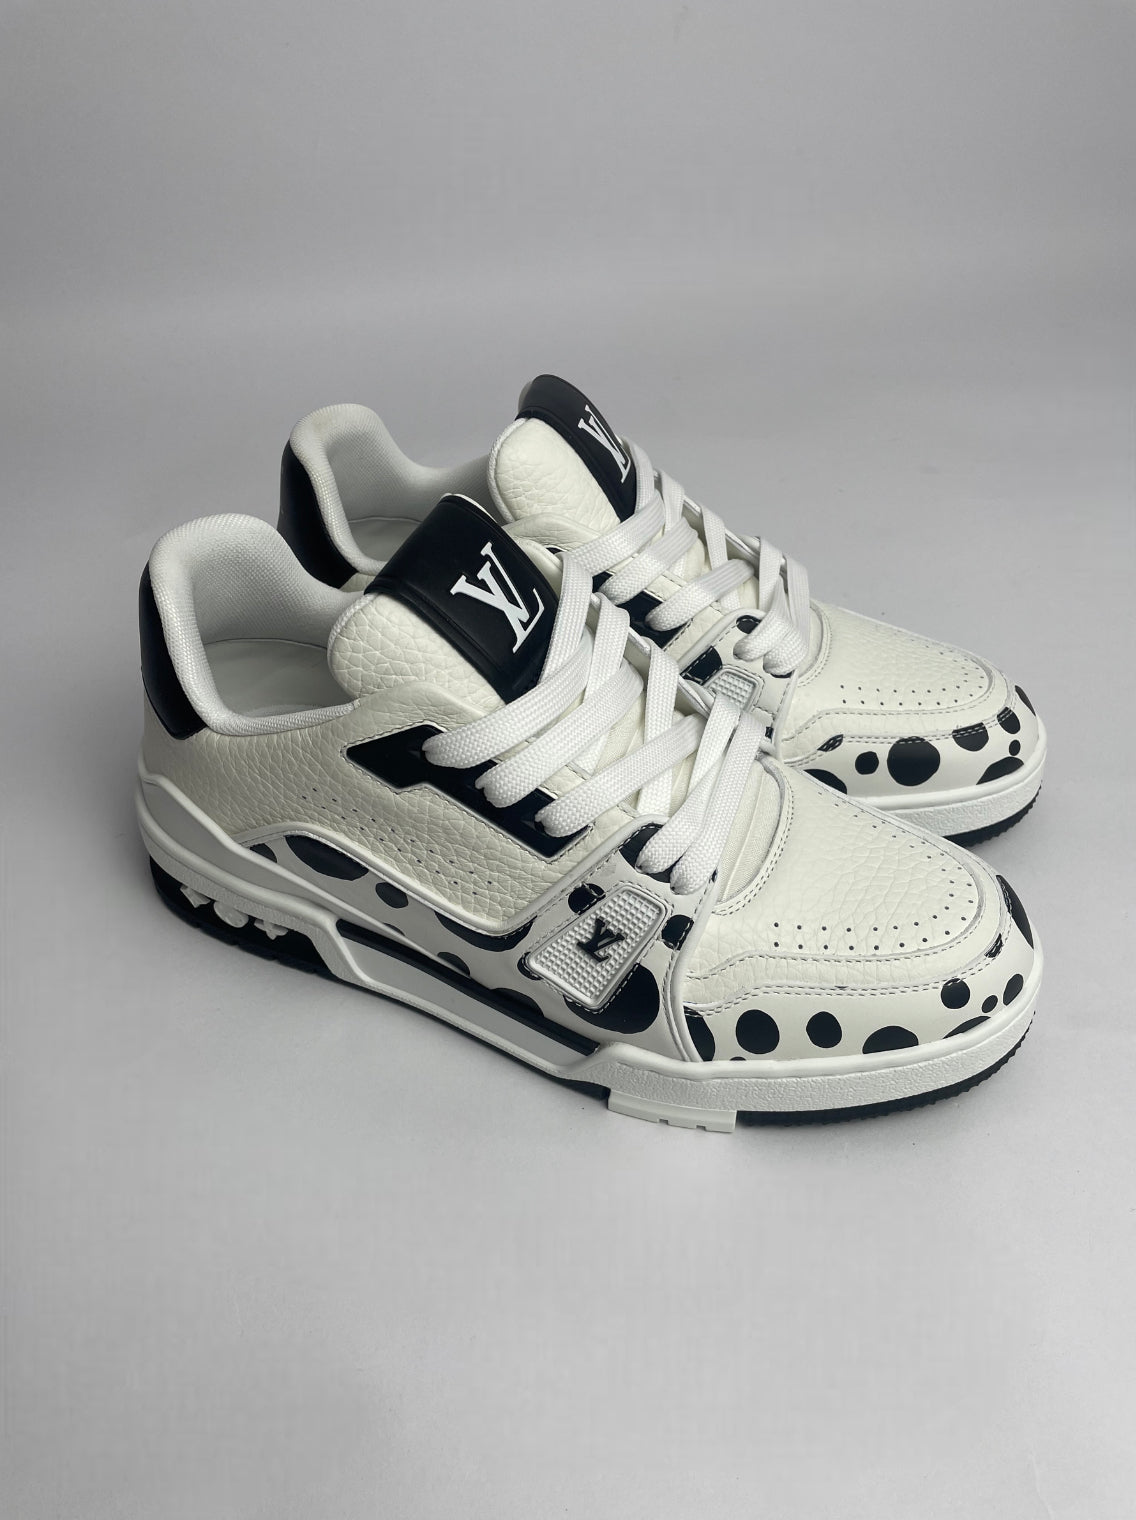 Louis Vuitton Sneakers X Kusama UK 4